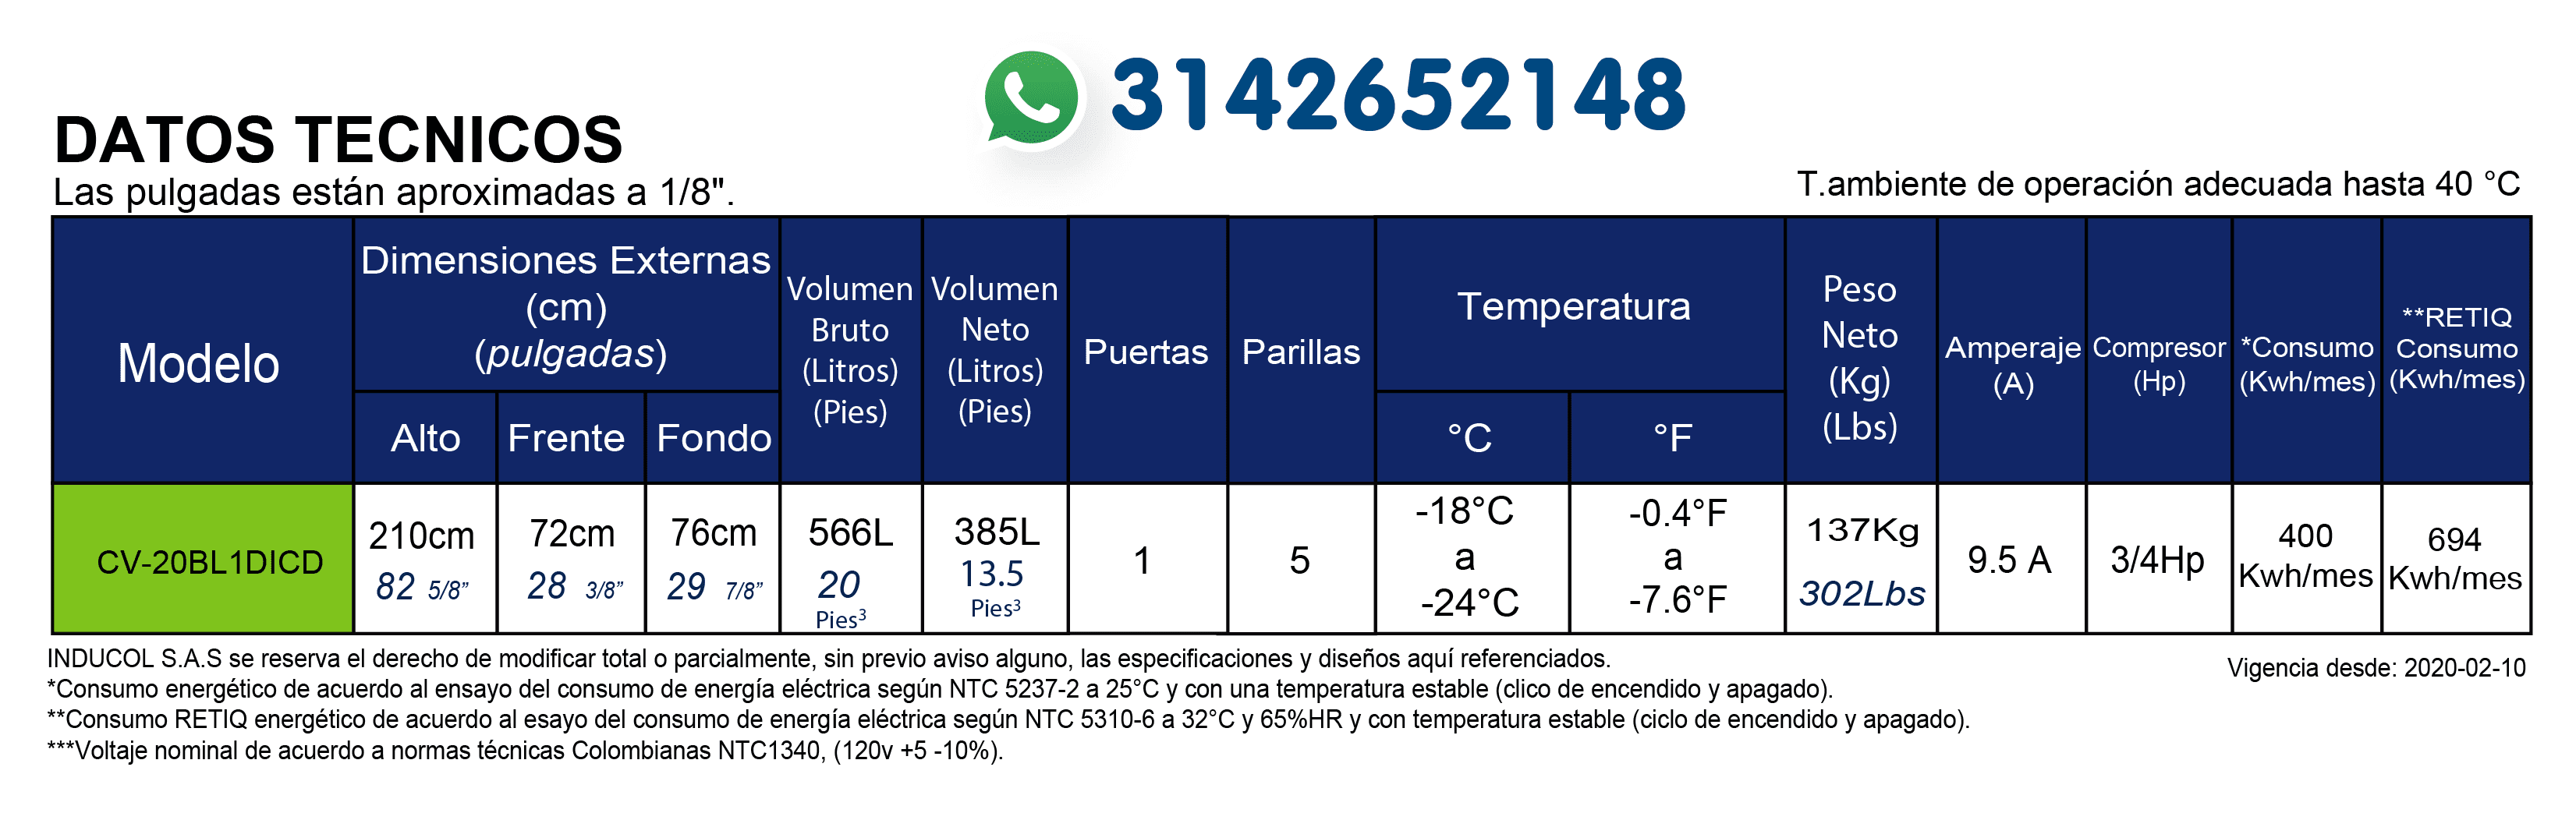 Congelador Vertical Inducol en Lamina Galvanizada de 566 Litros CV-20BL1DICD